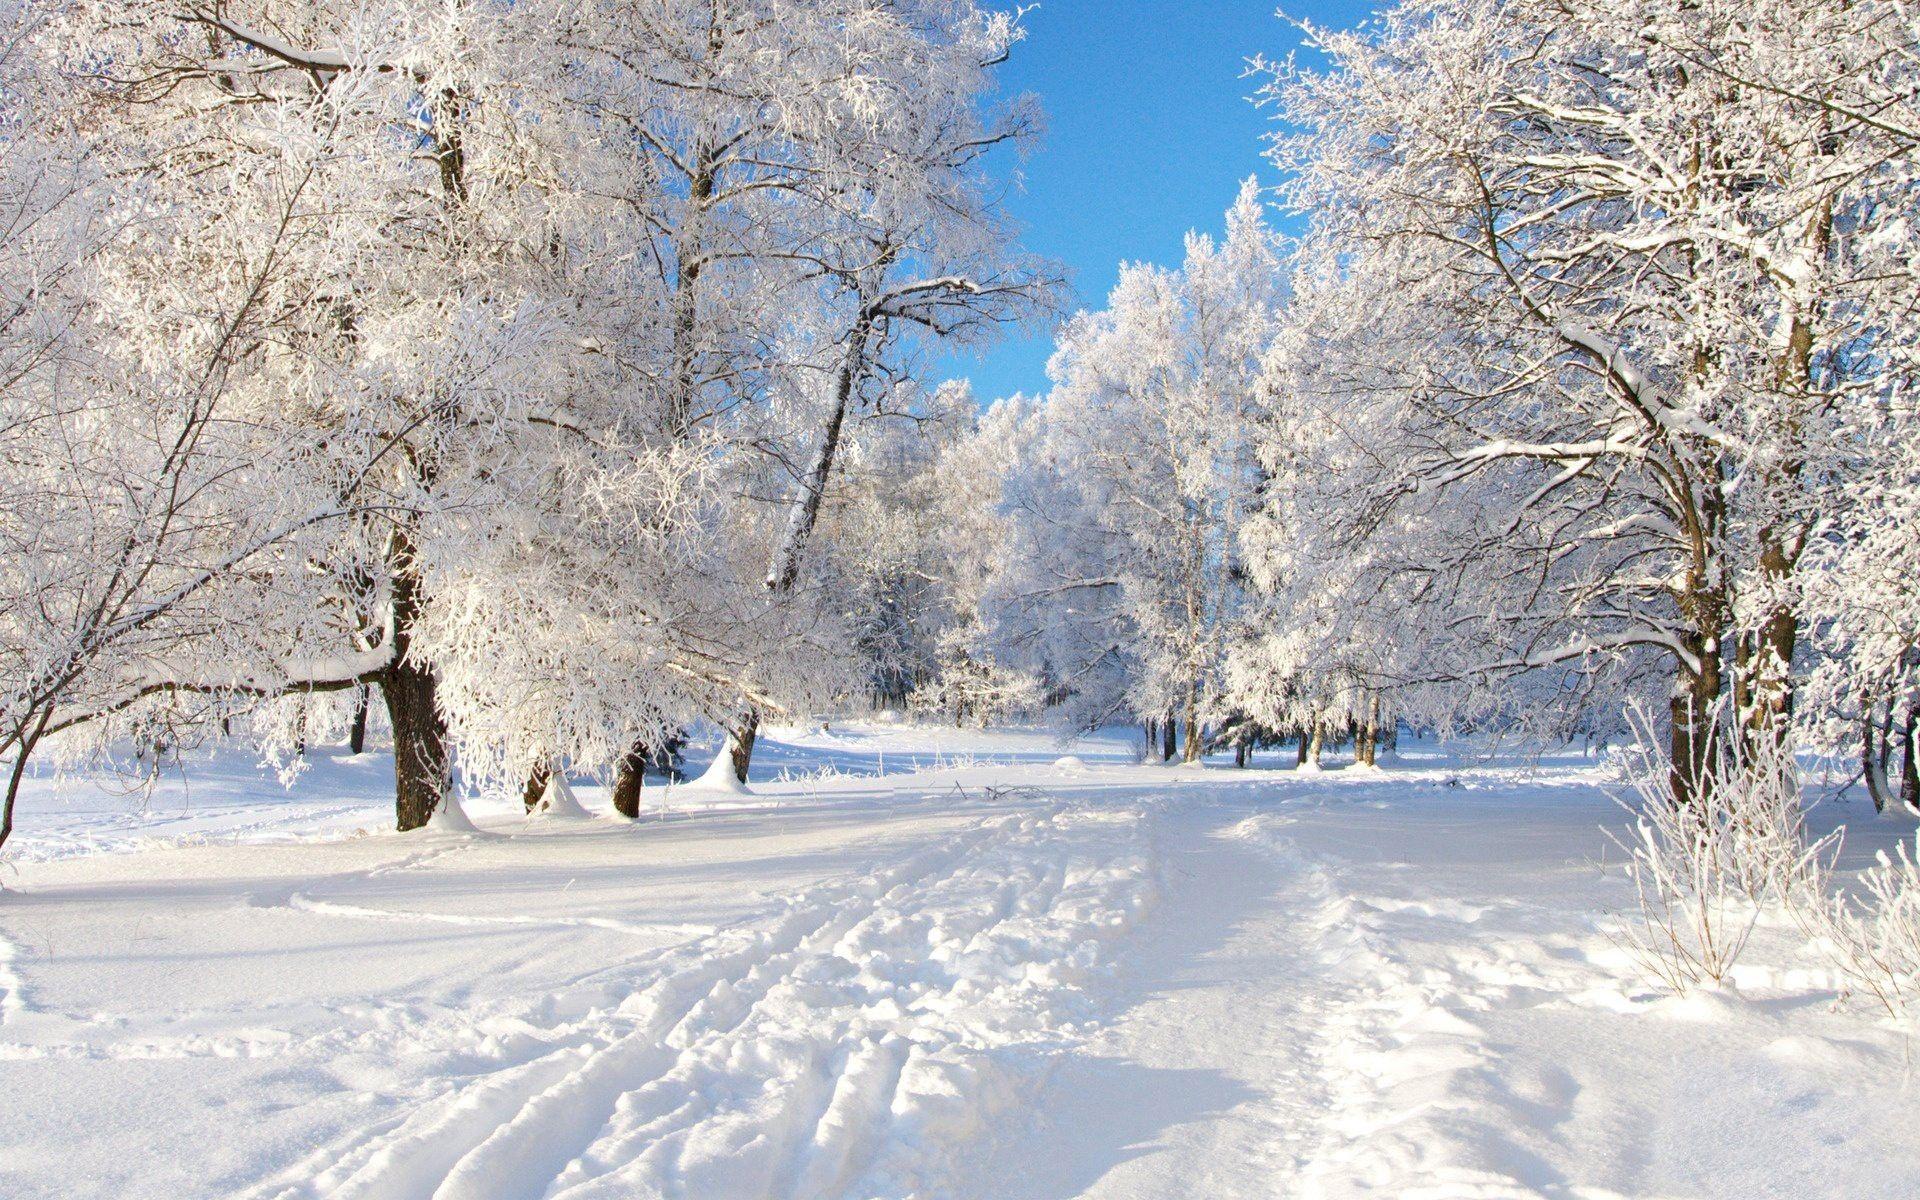 winter wonderland desktop wallpaper